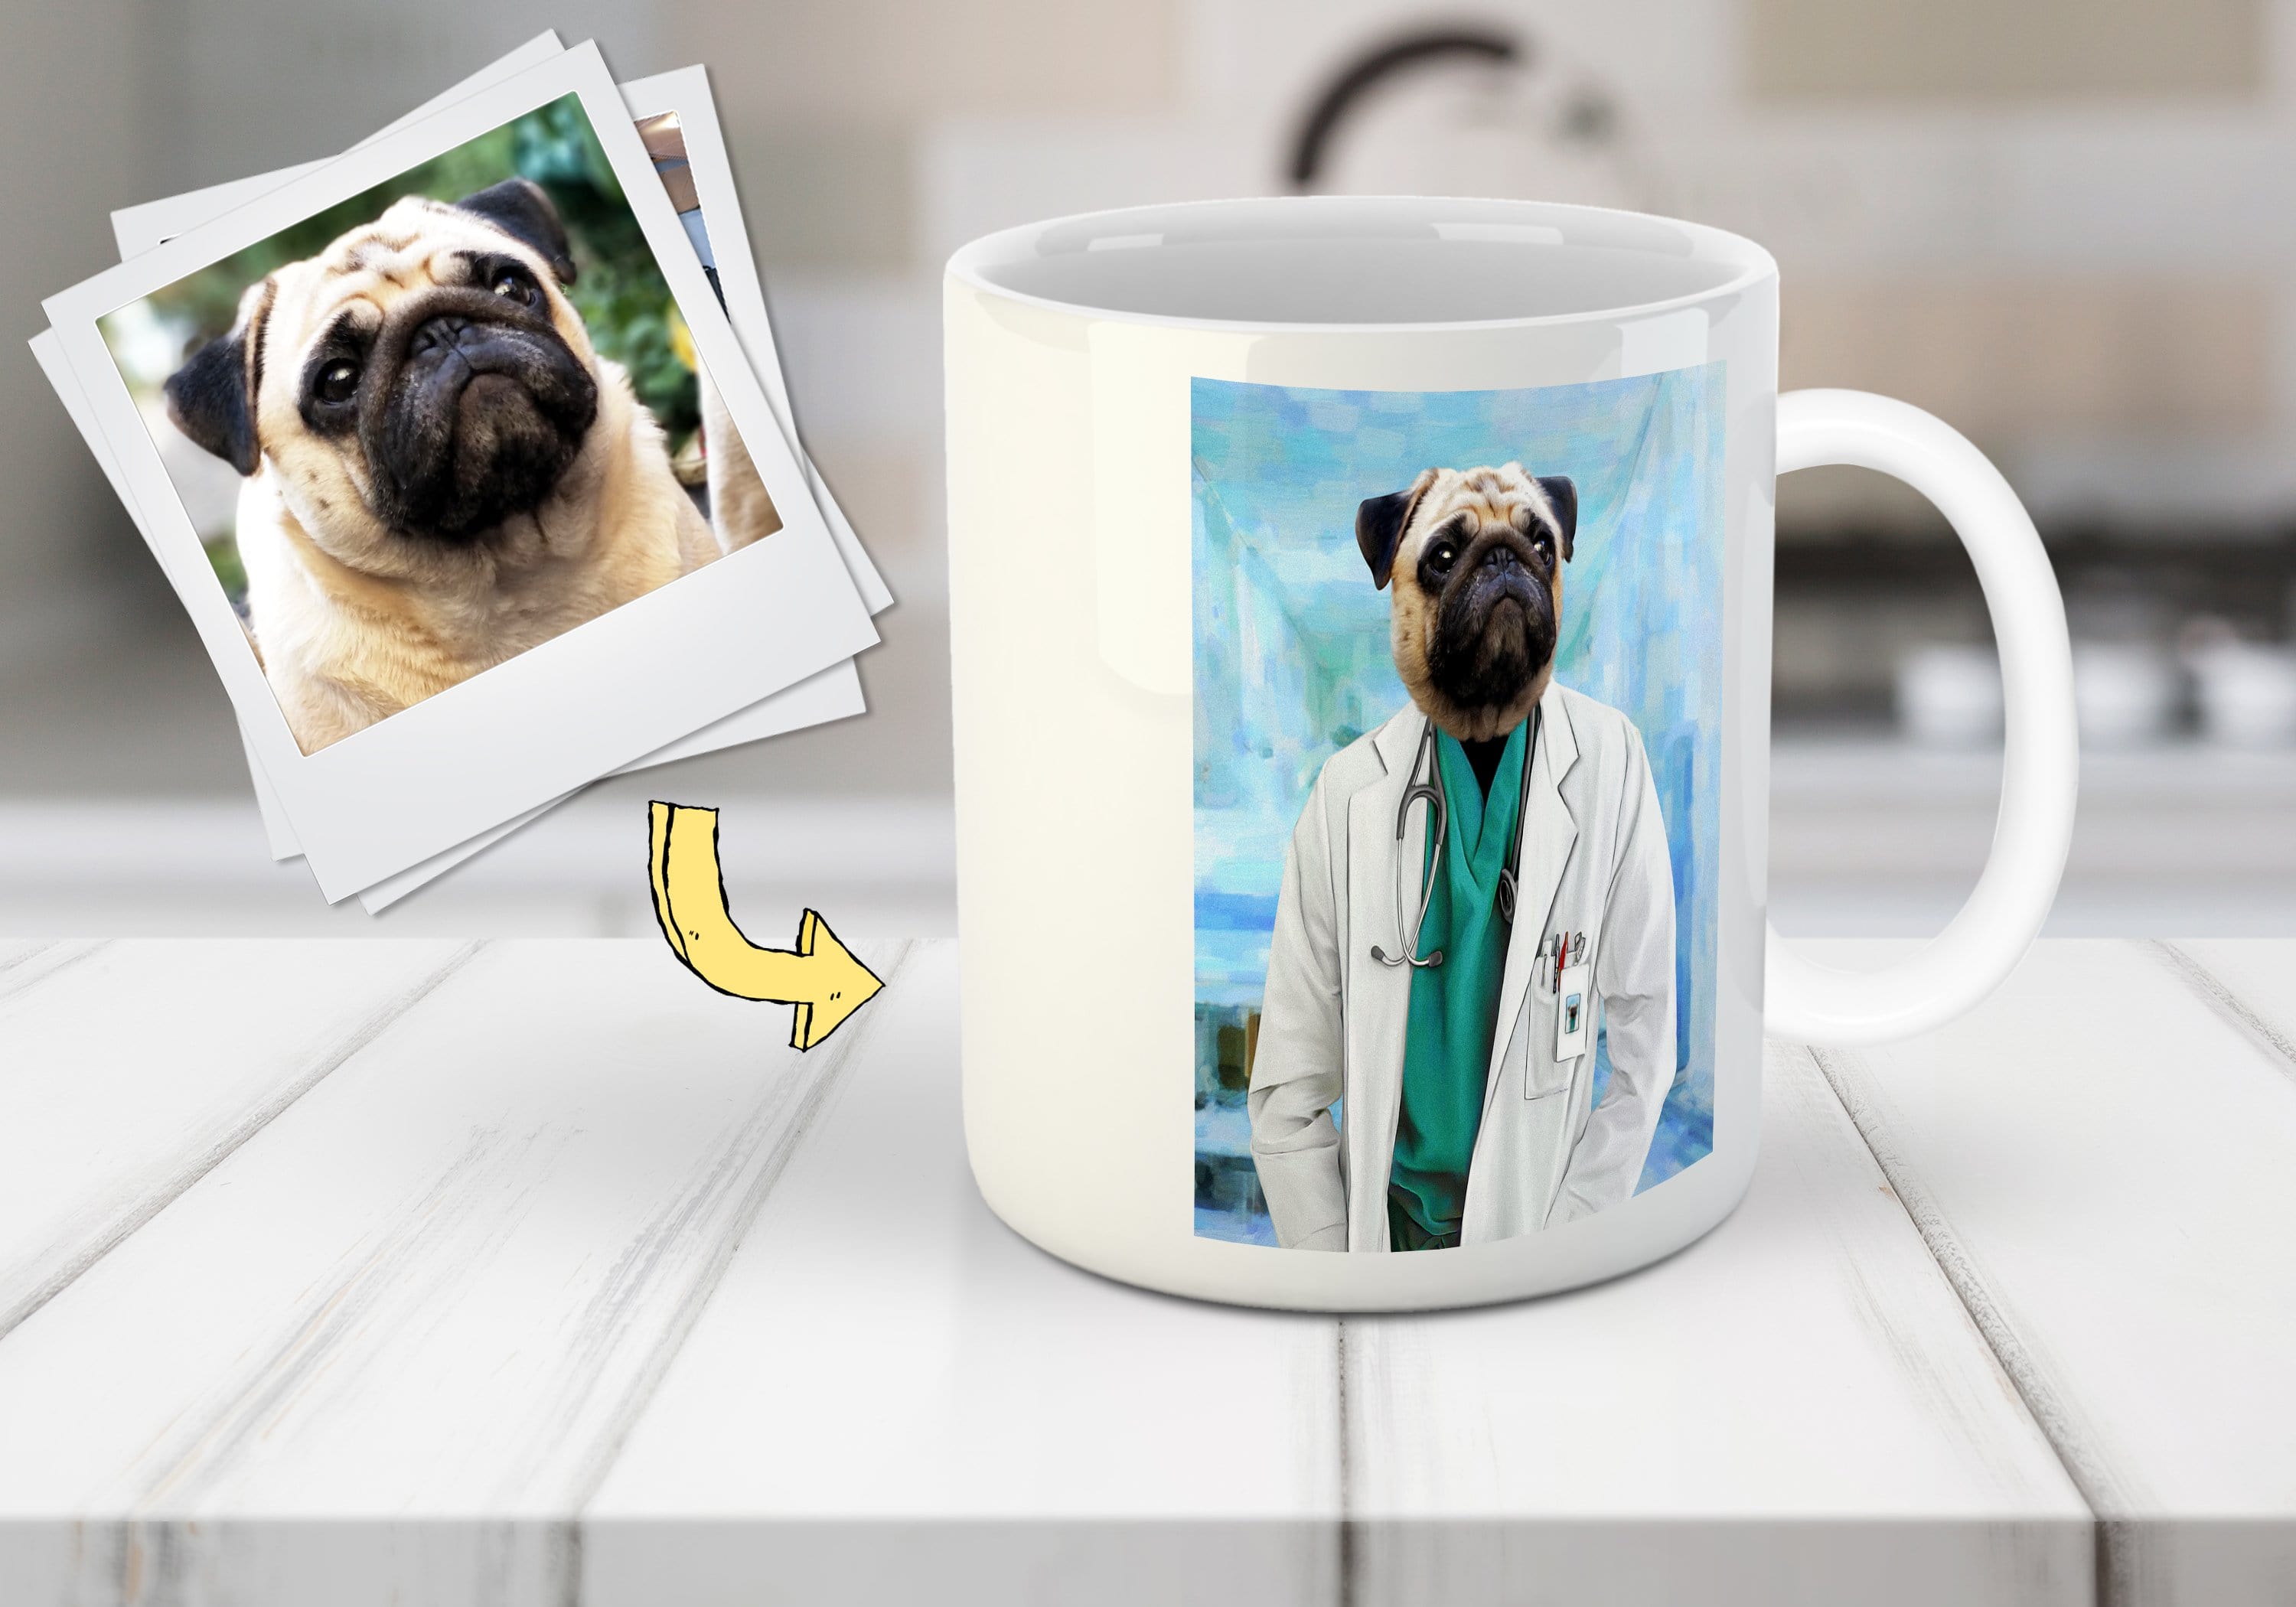 'The Doctor' Custom Pet Mug